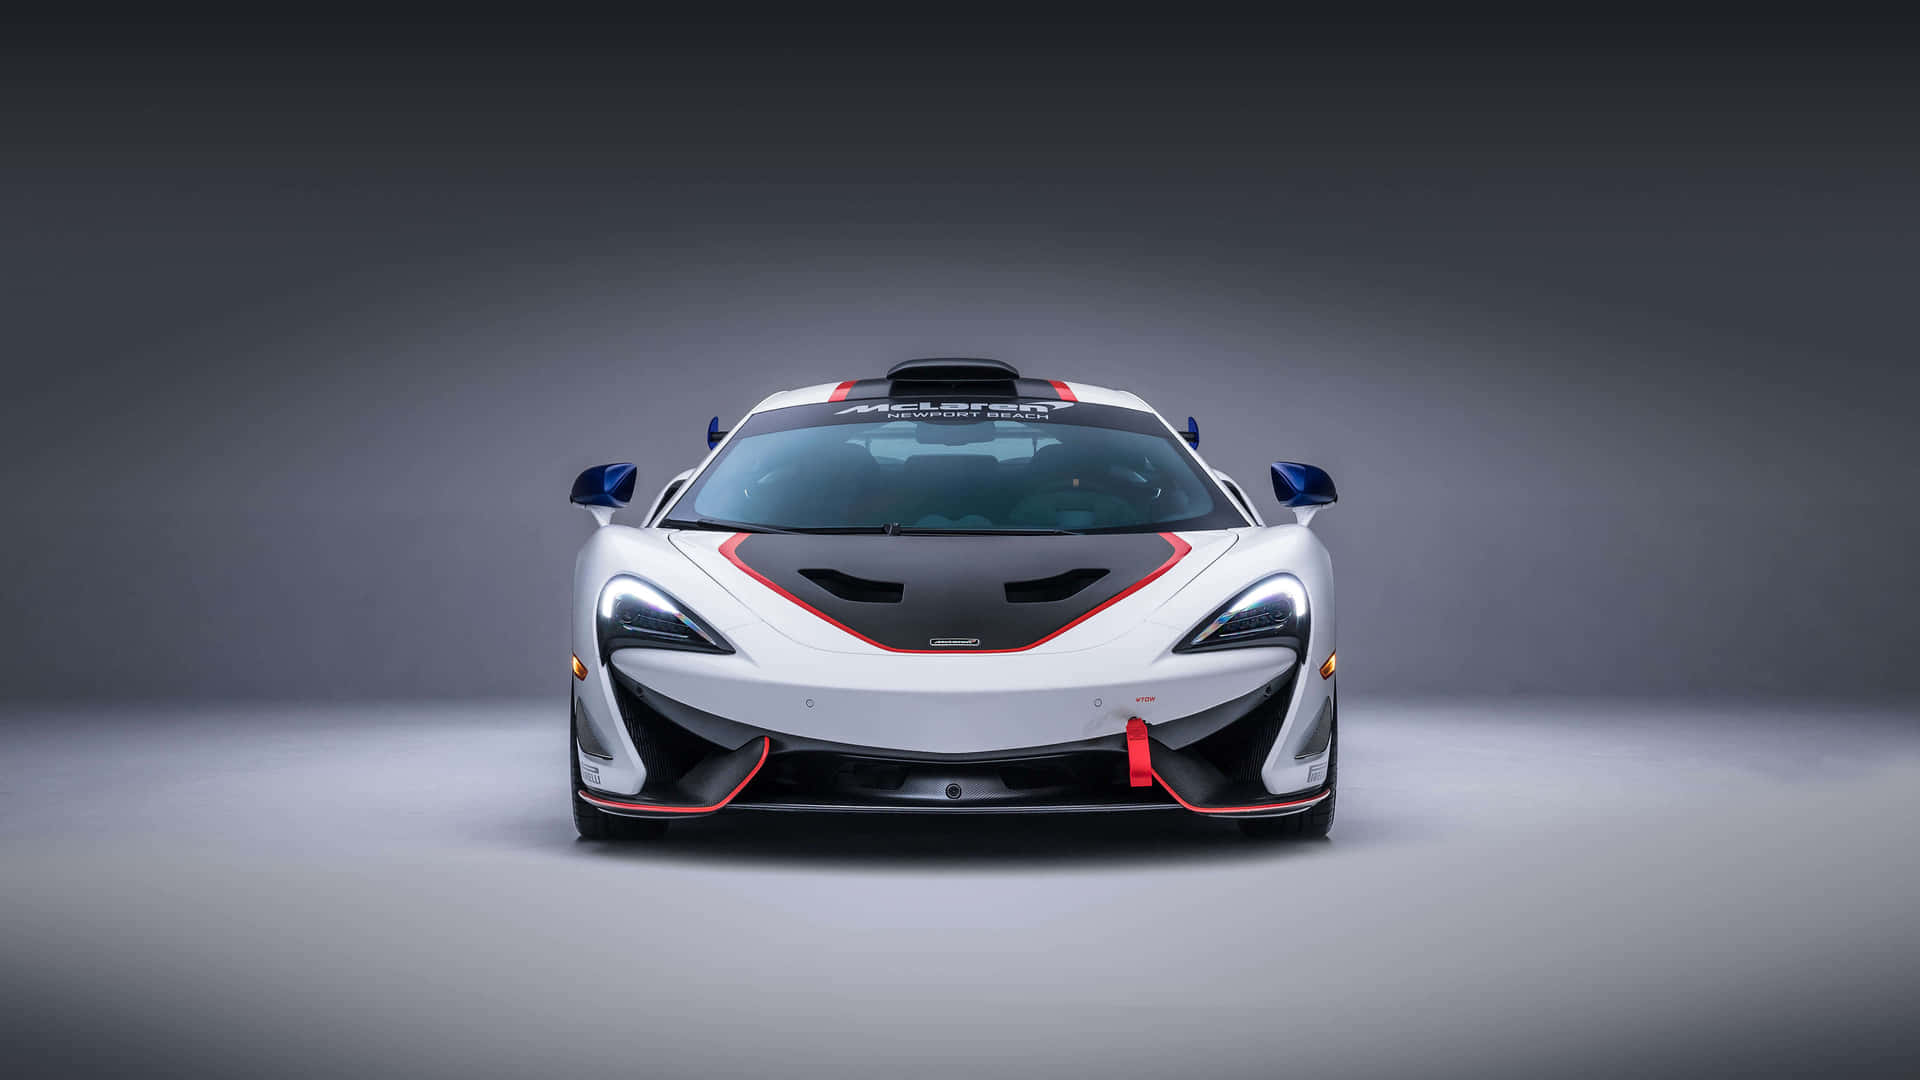 Stunning McLaren Supercar in Action